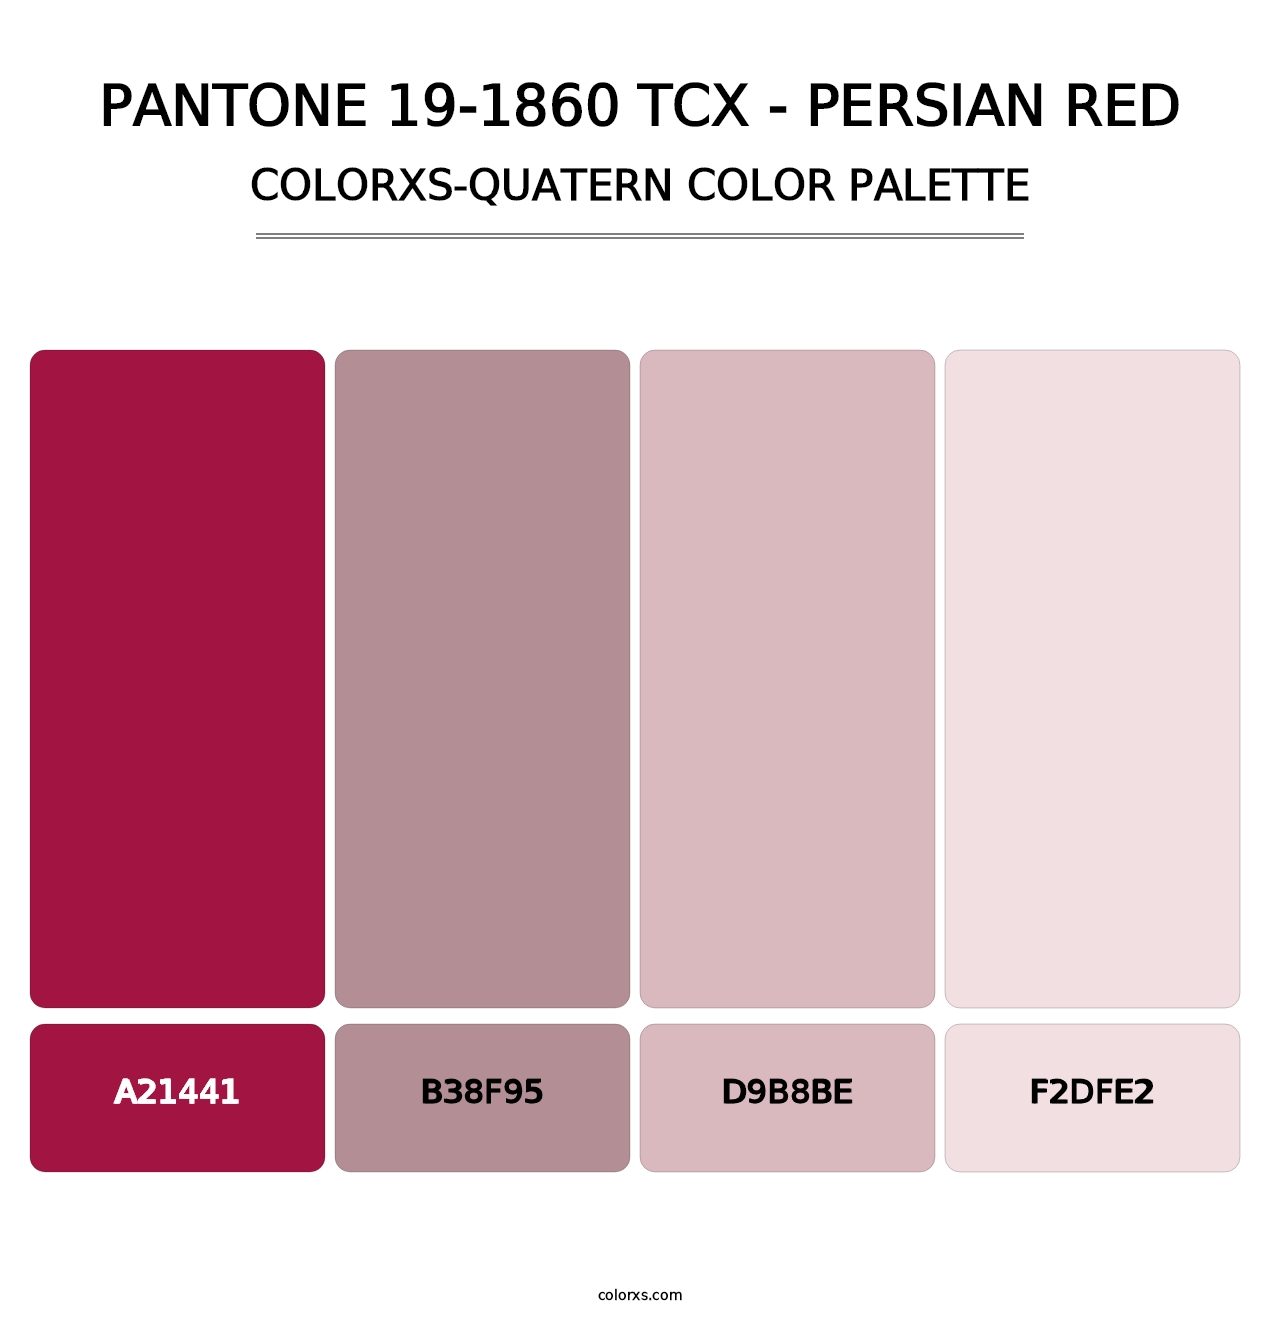 PANTONE 19-1860 TCX - Persian Red - Colorxs Quatern Palette